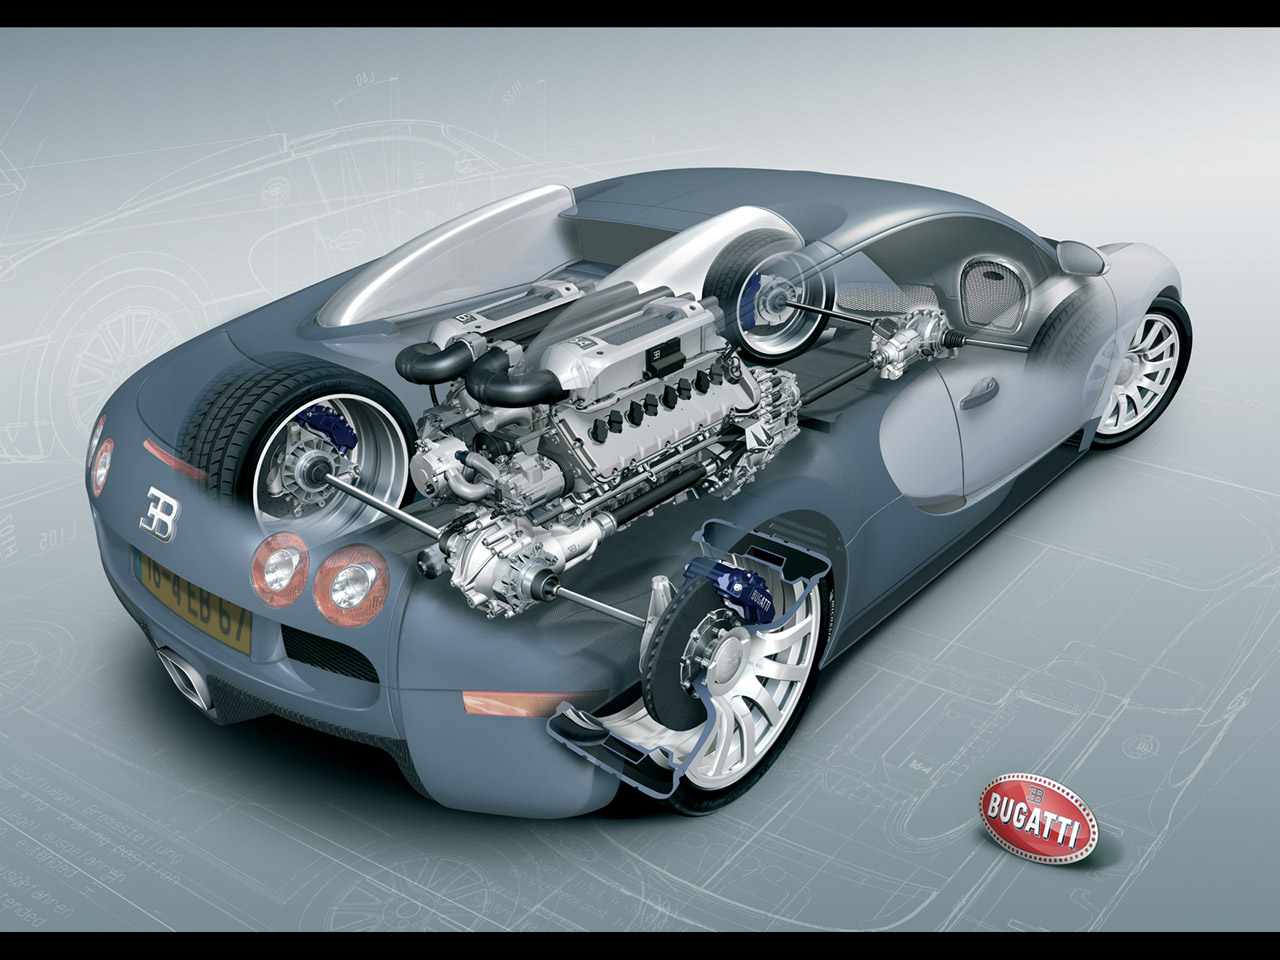 Bugatti Veyron Includes